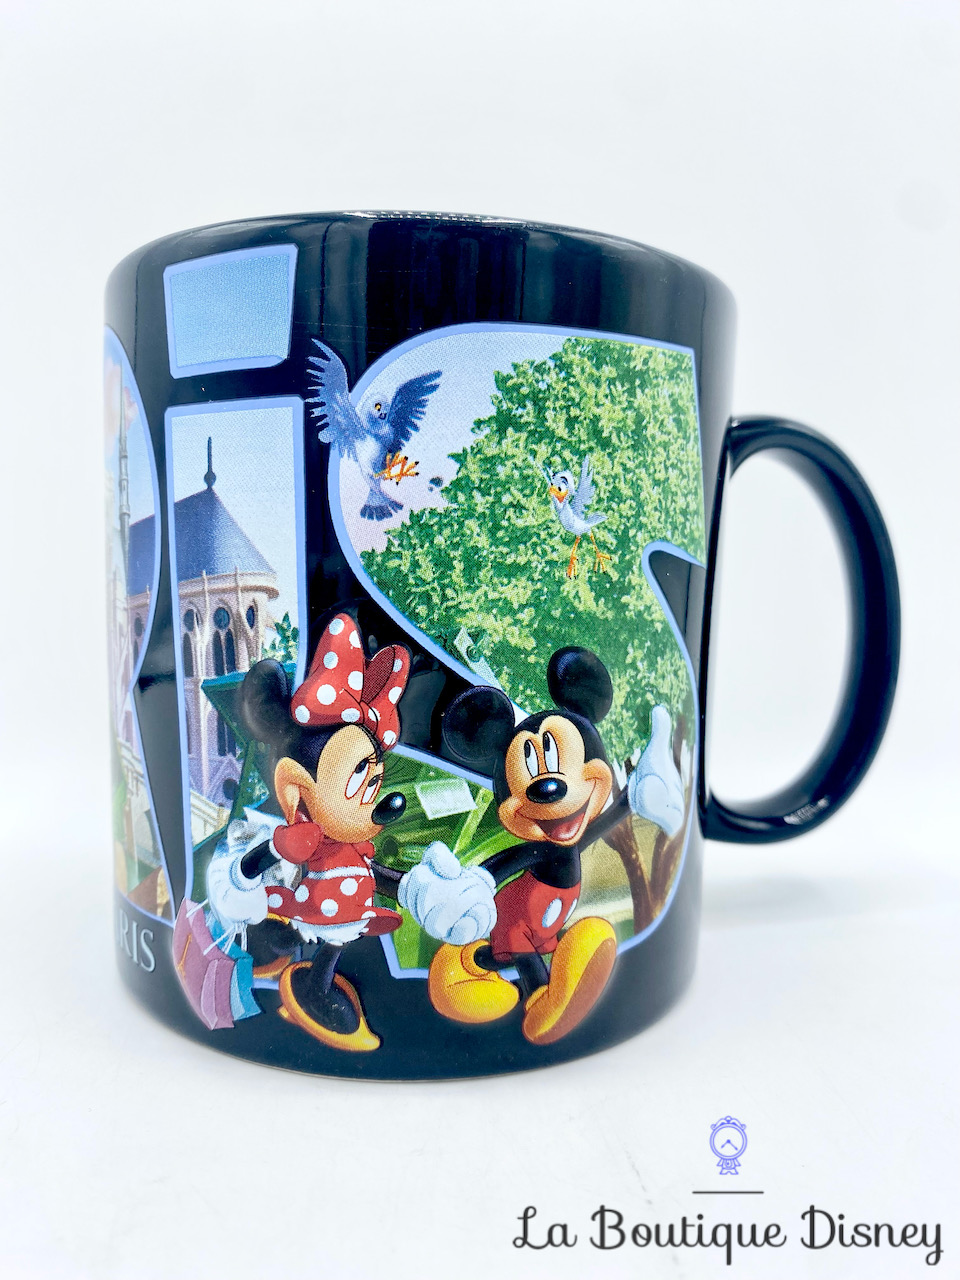 Tasse Mickey Mouse Minnie Mouse Paris Disneyland Disney mug ville relief 3D